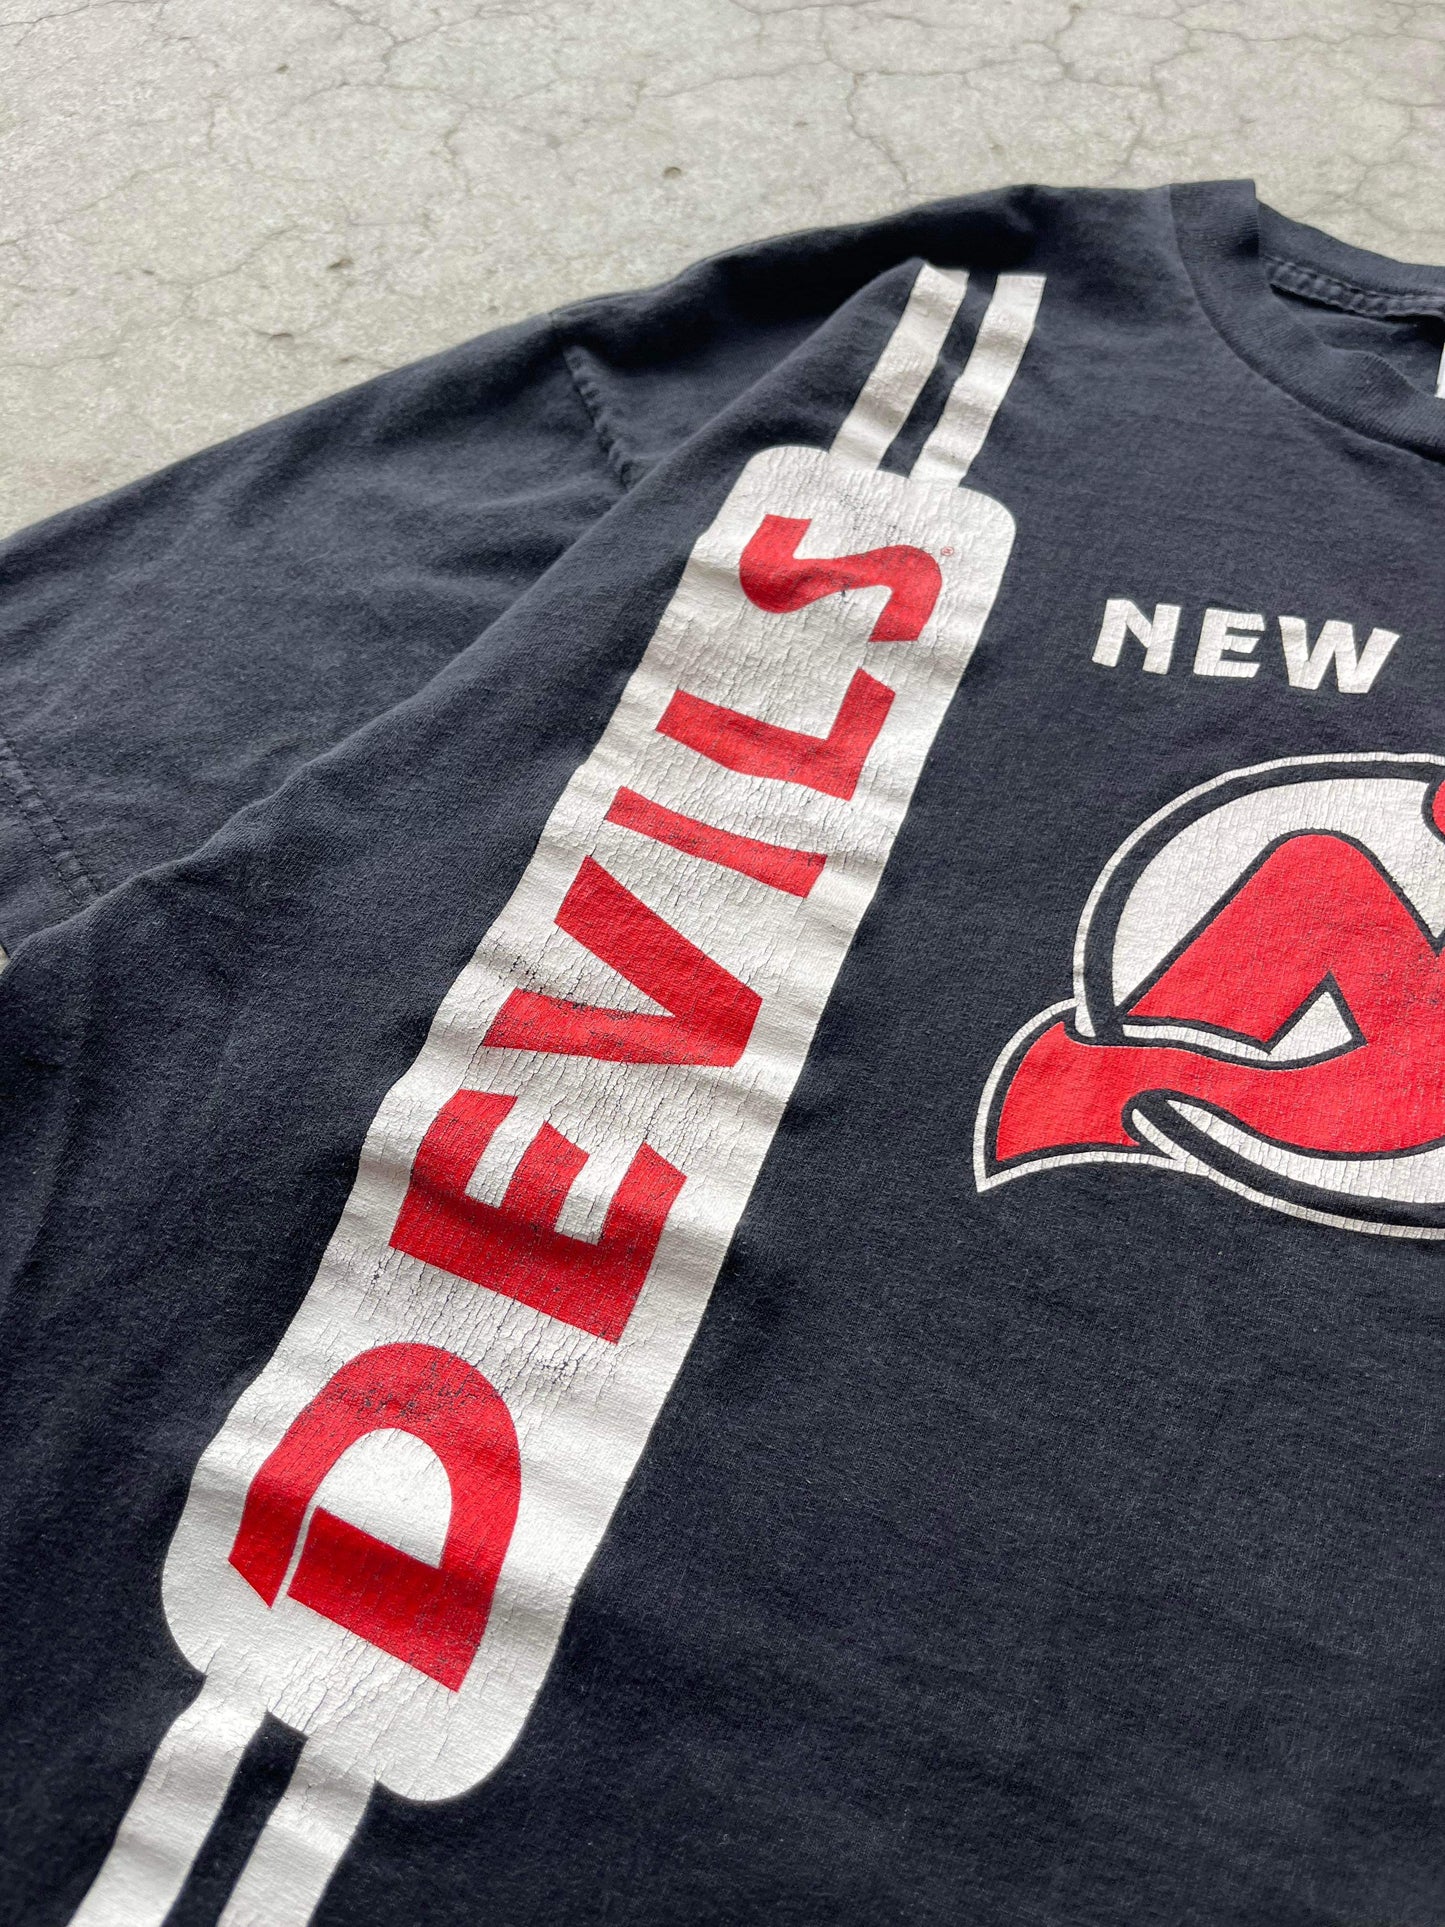 (2X) 90’s New Jersey Devils NHL TEE